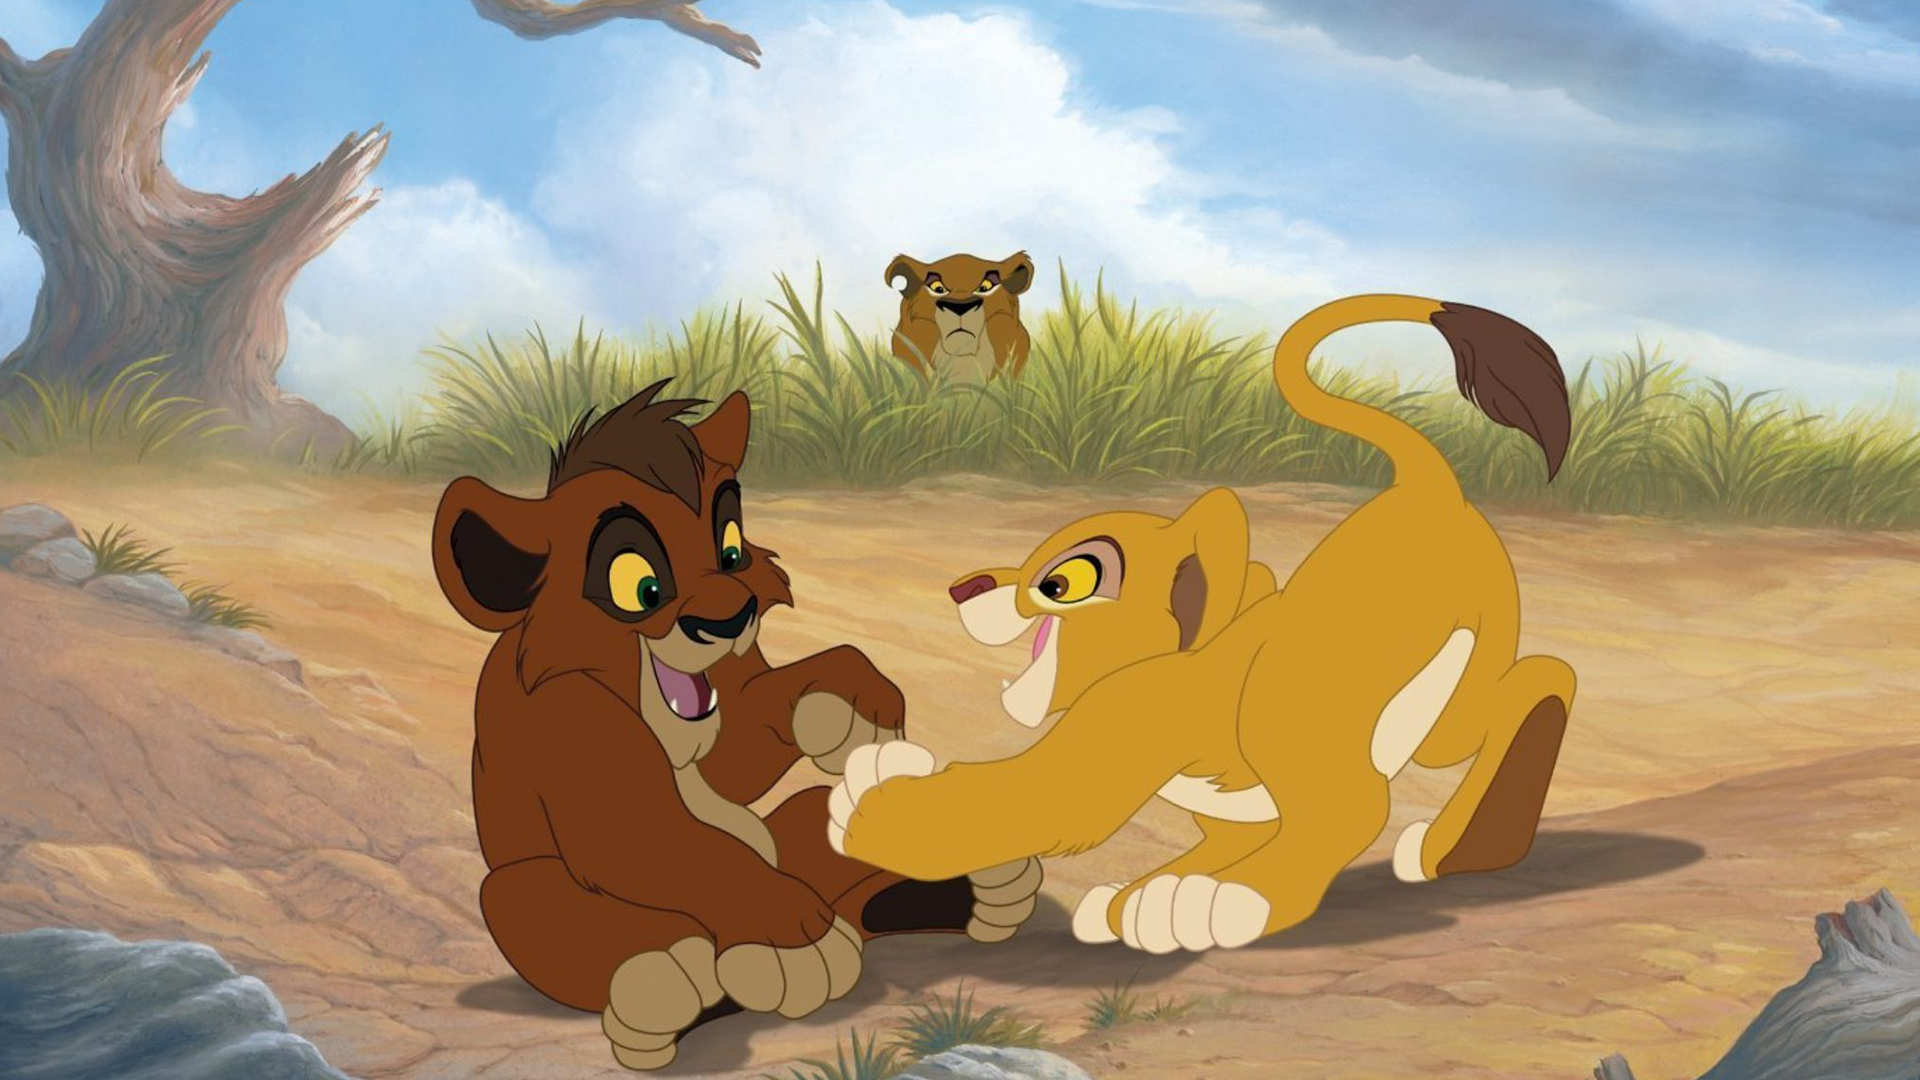 Kiara and Kovu from The Lion King 2